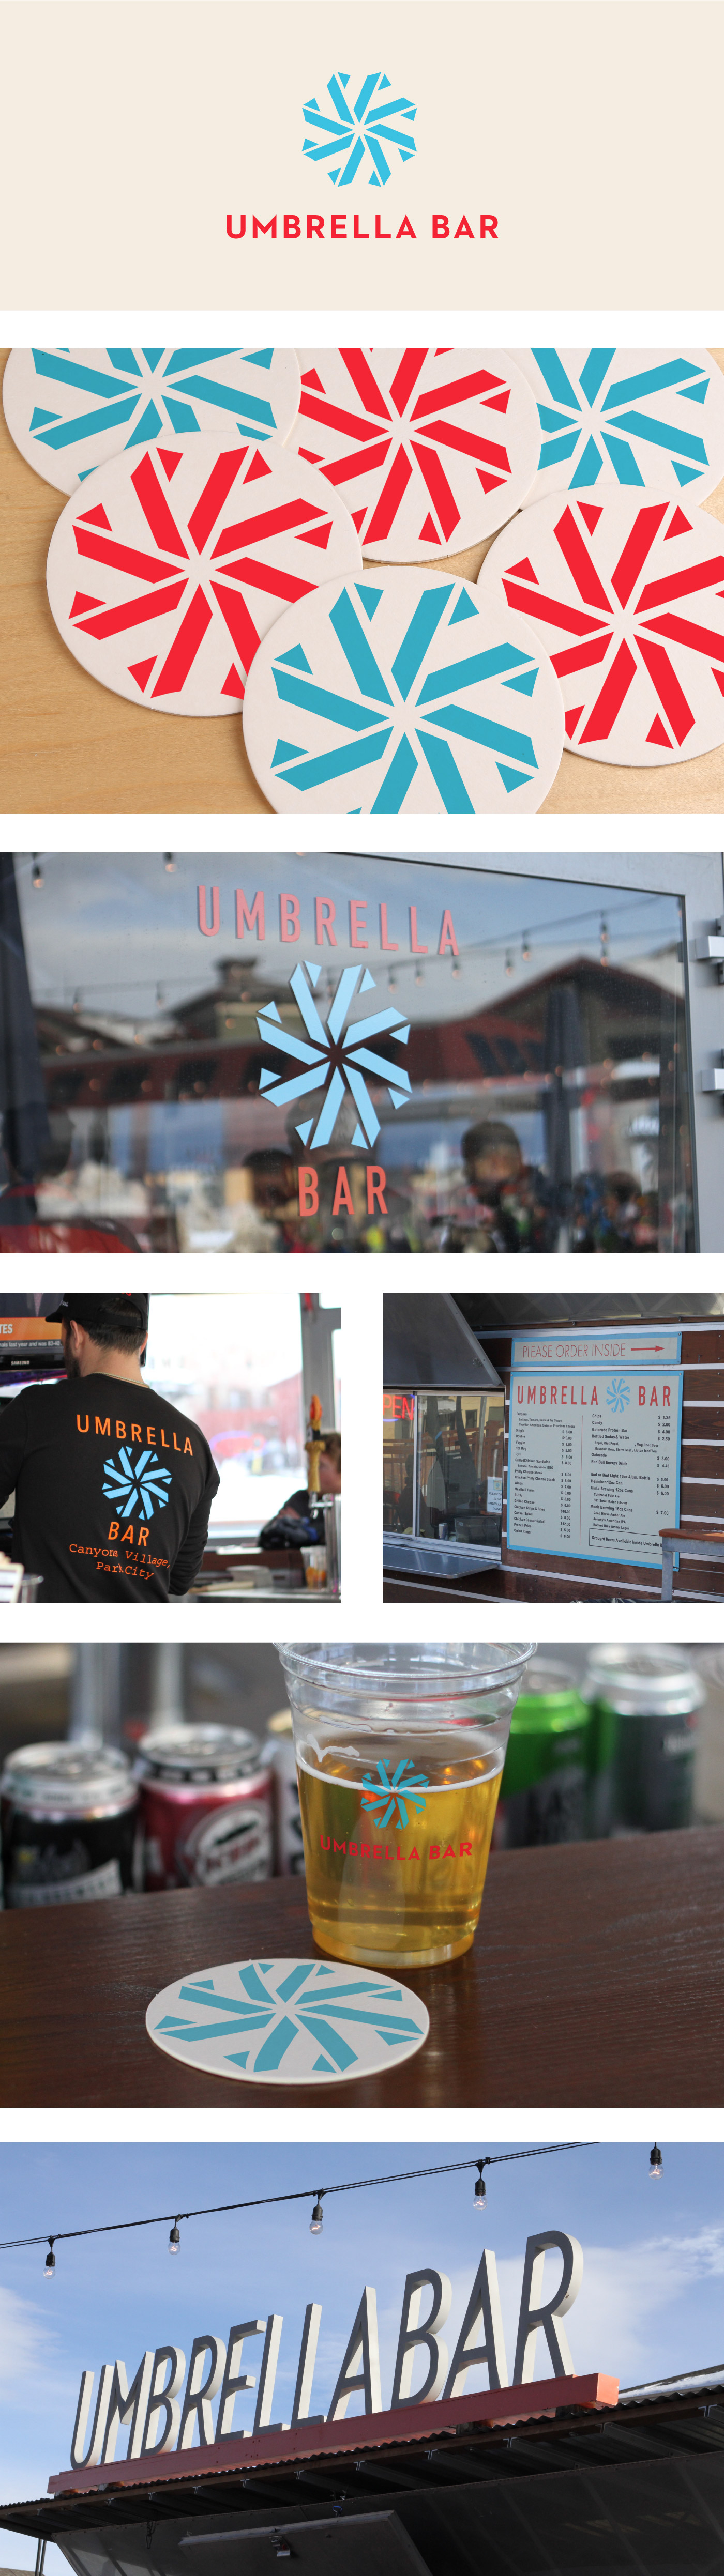 umbrella bar Canyons Resort PARK CITY Signage outdoors skiing apres ski